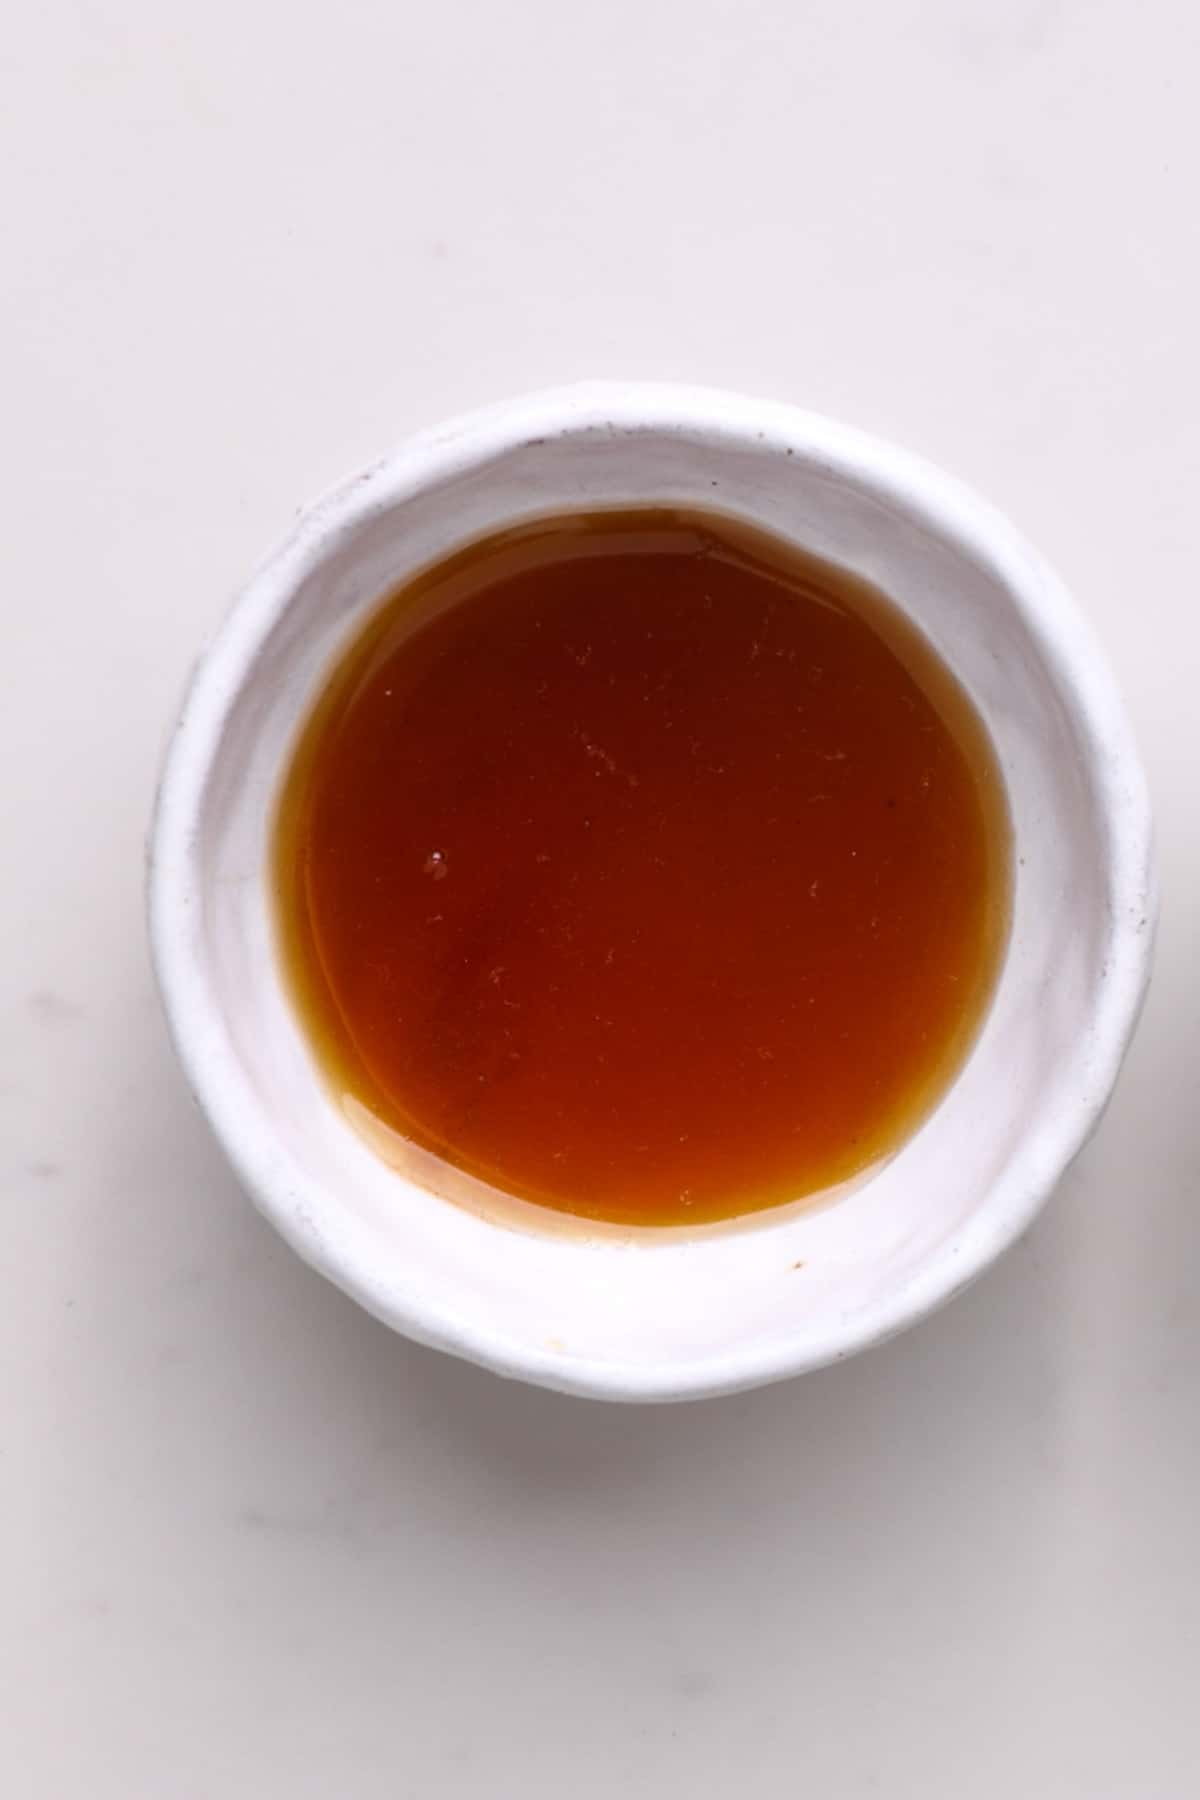 Liquid sweetener in a bowl